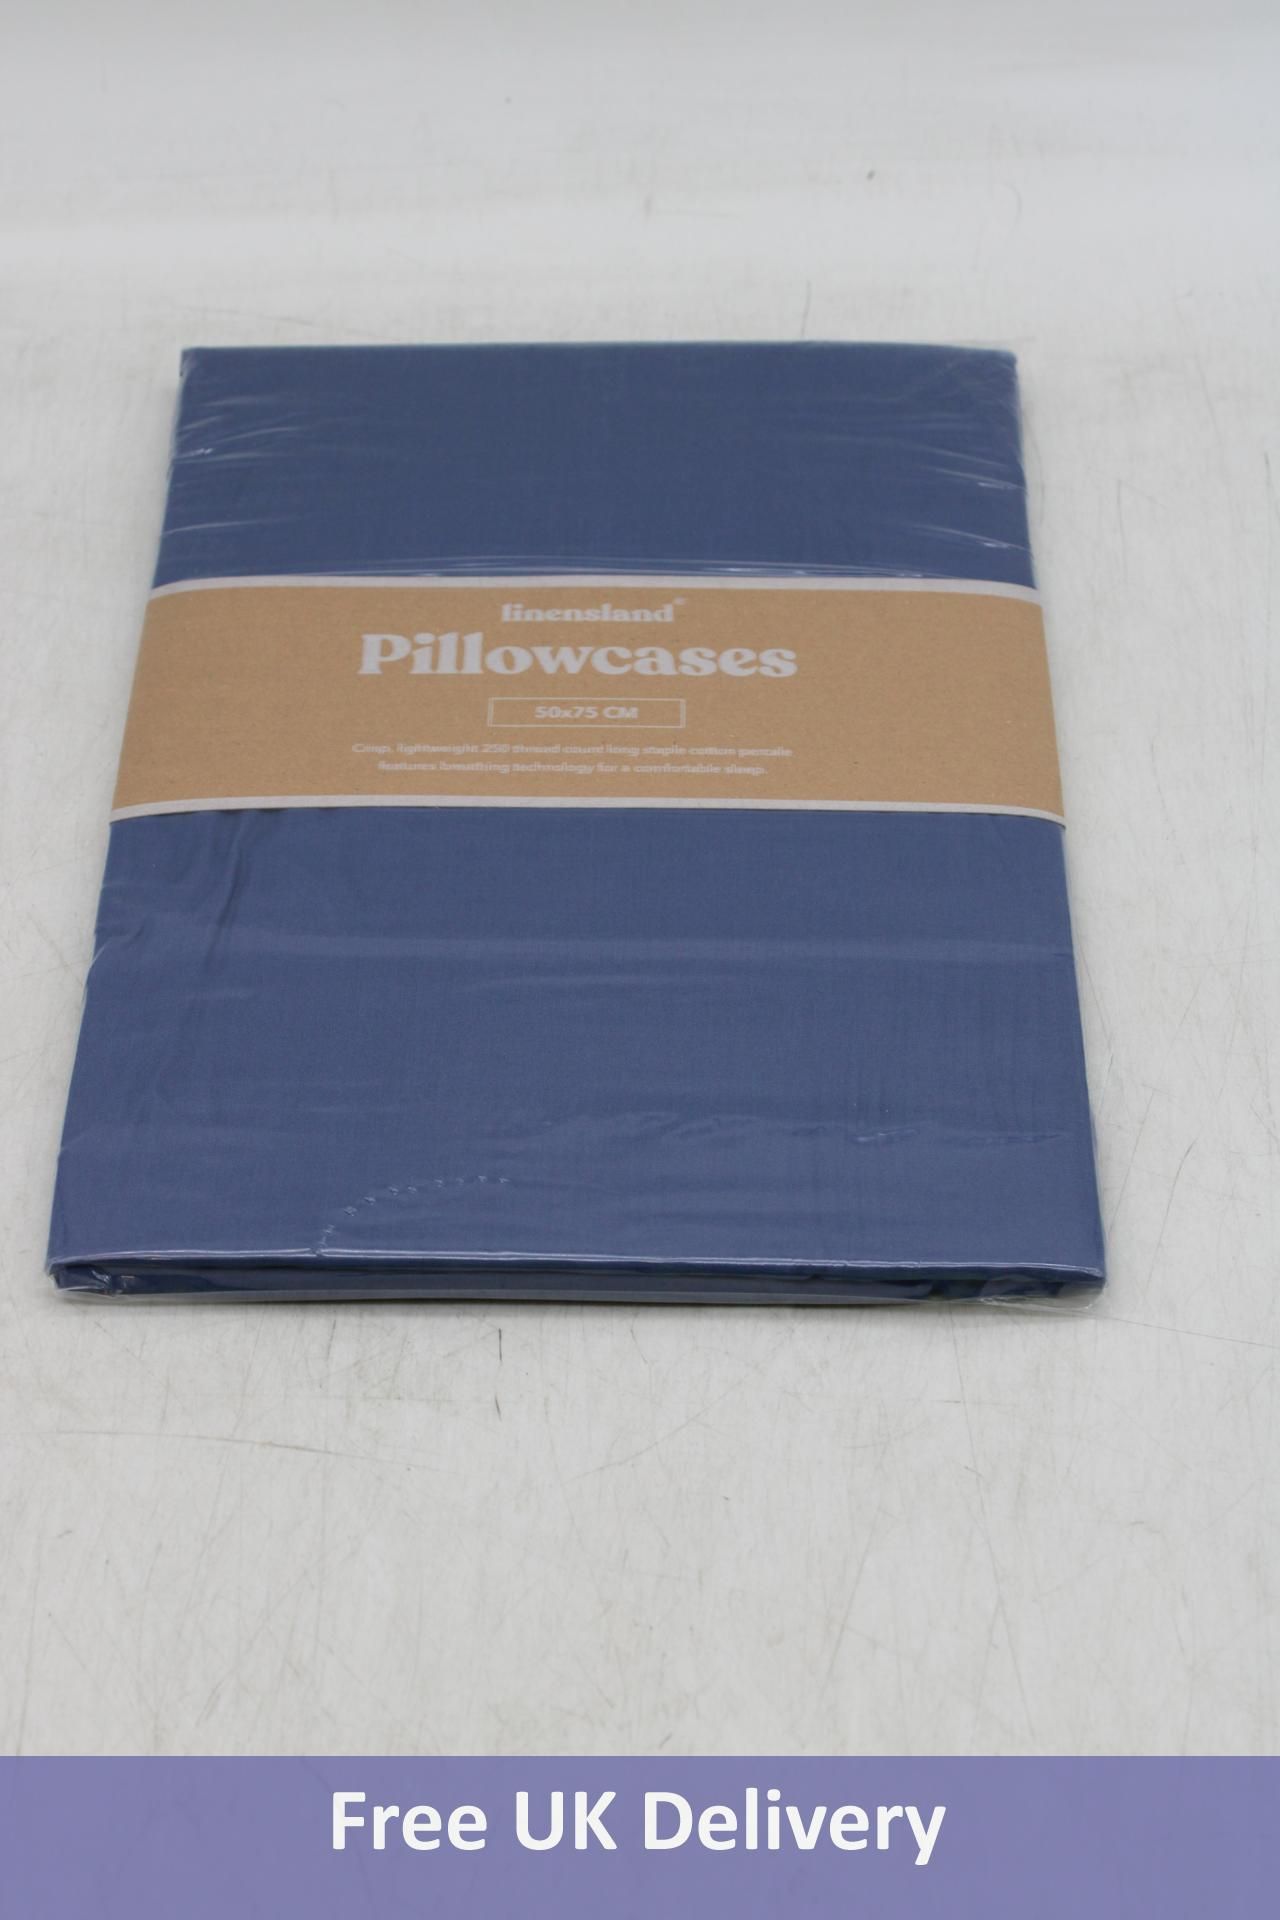 Twenty-five packs of Linensland Pillowcase, Navy, 50 x 75 cm, 4 per pack - Image 4 of 5